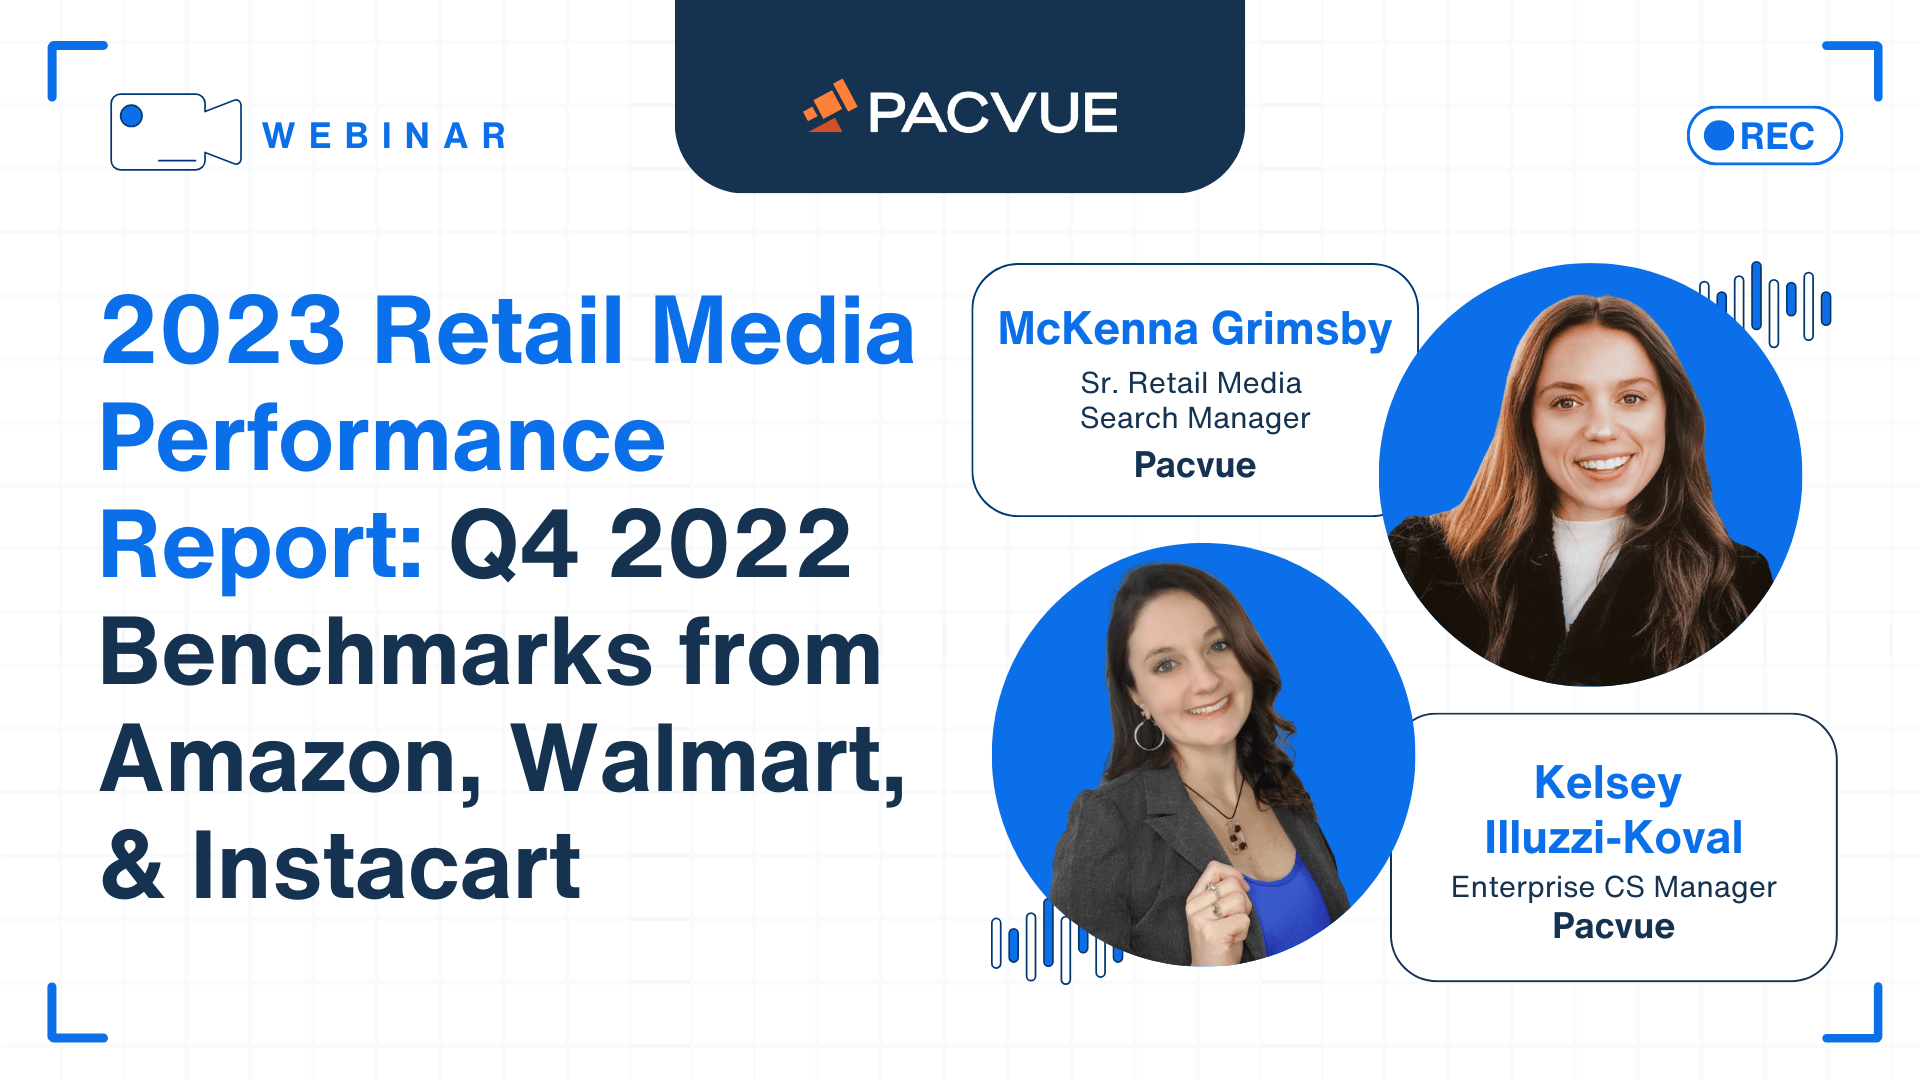 2023 Retail Media Performance Report: Q4 2022 Benchmarks from Amazon, Walmart, & Instacart